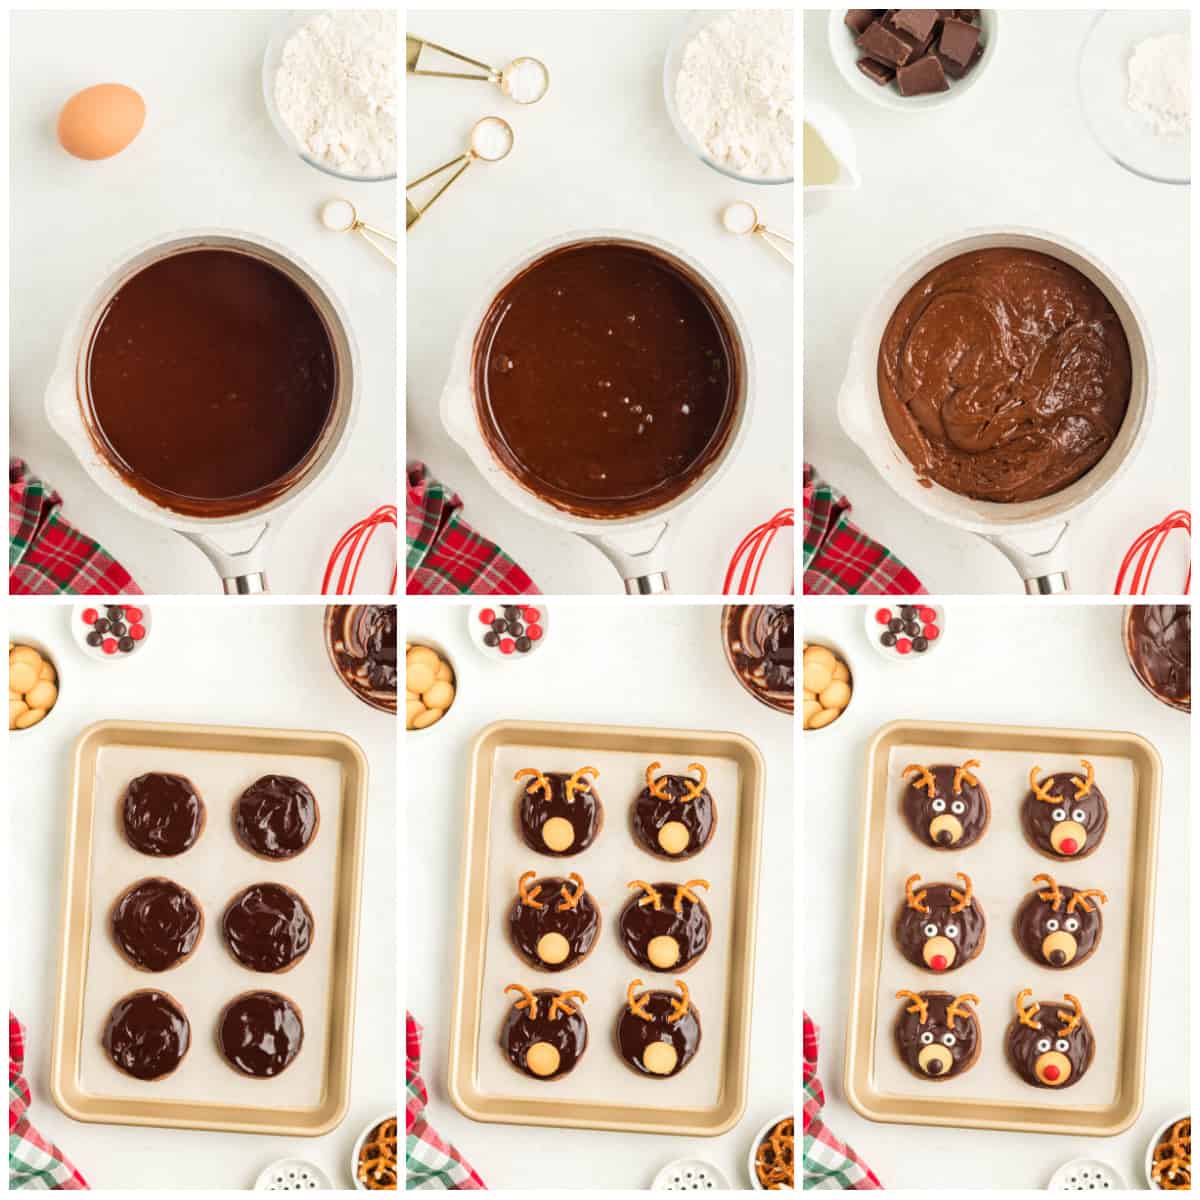 Step by step photos on how to make Reindeer Cookies.